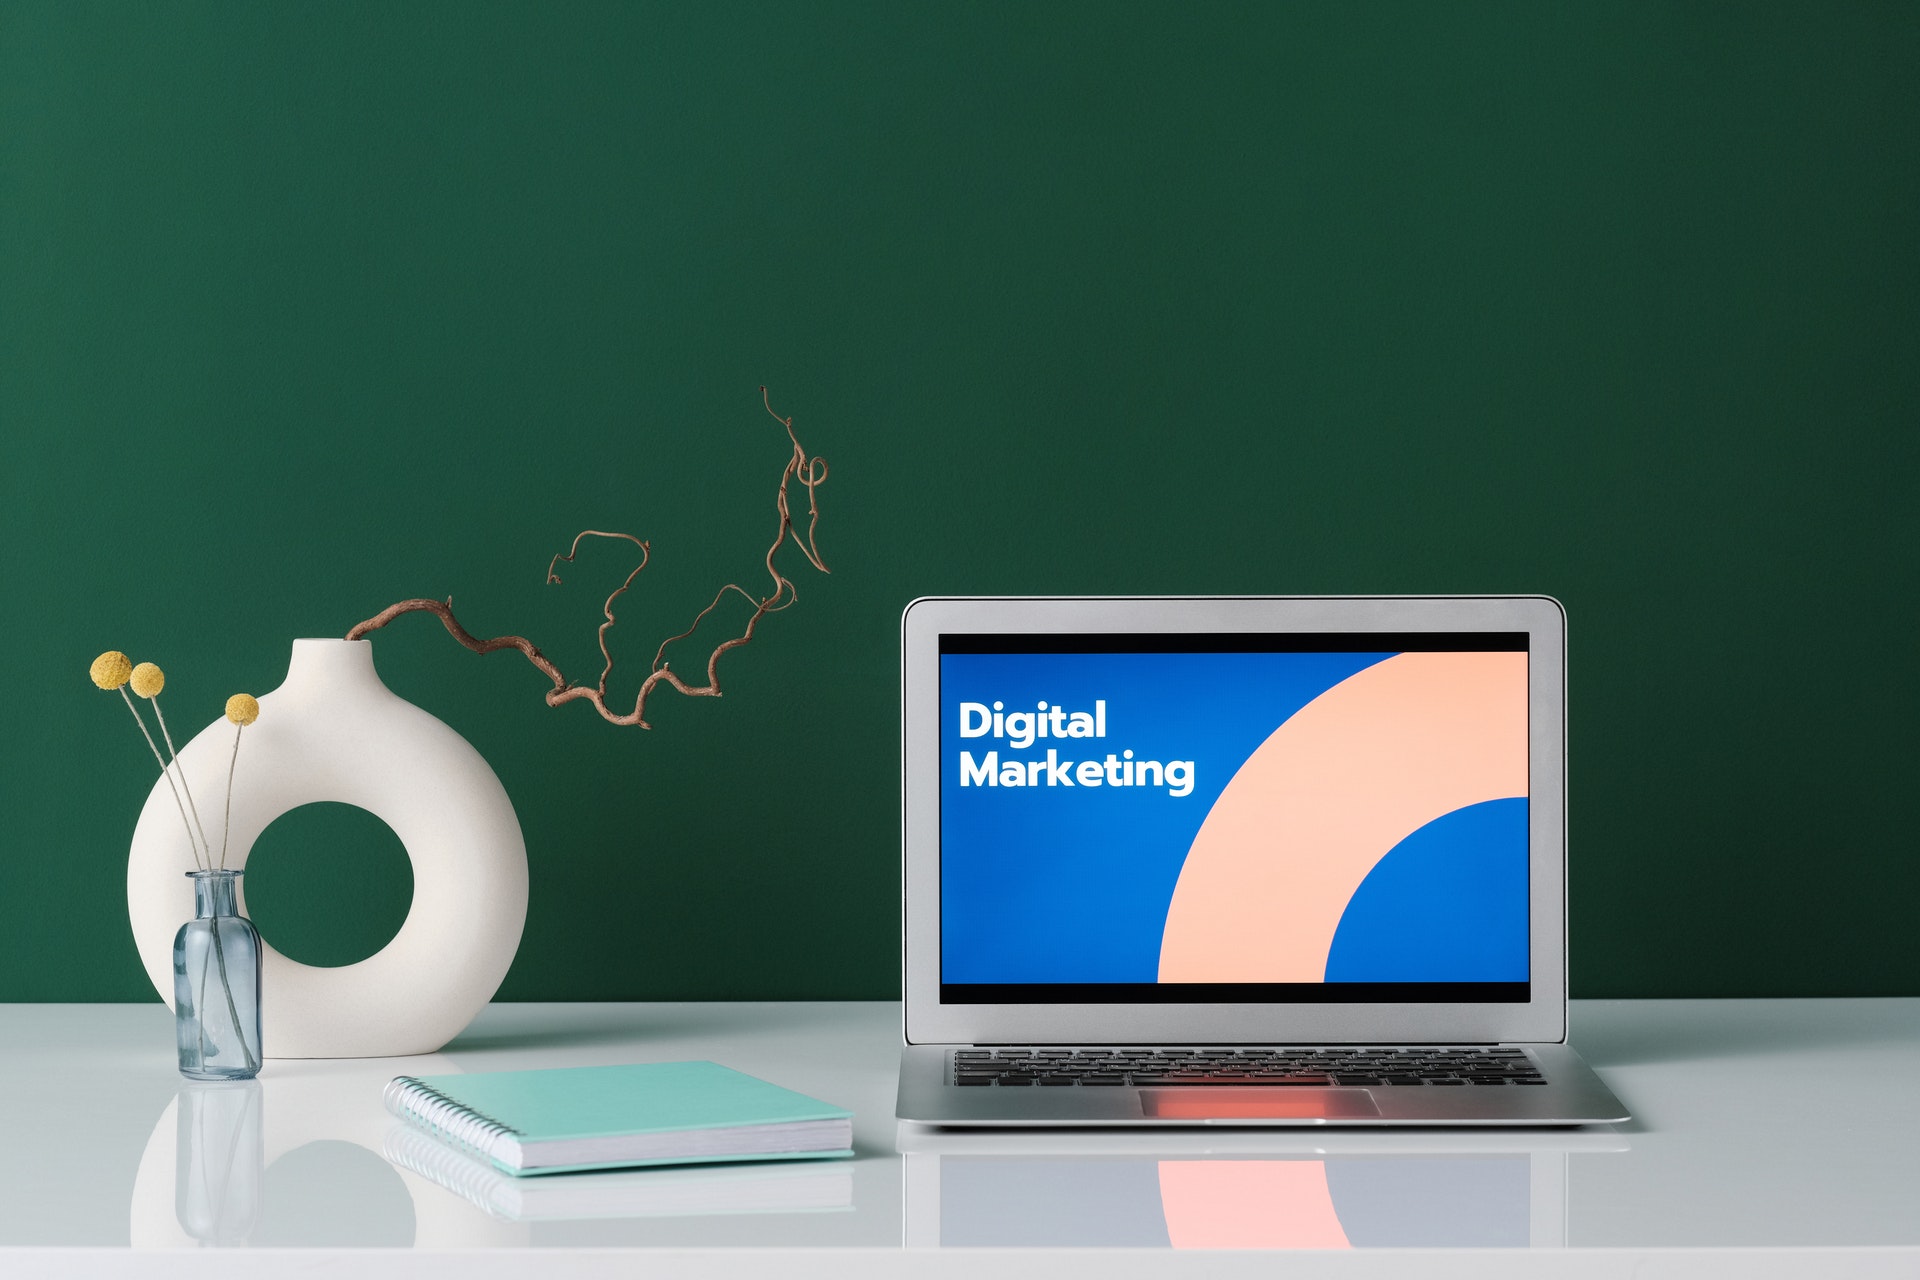 Laptop with Digital Marketing